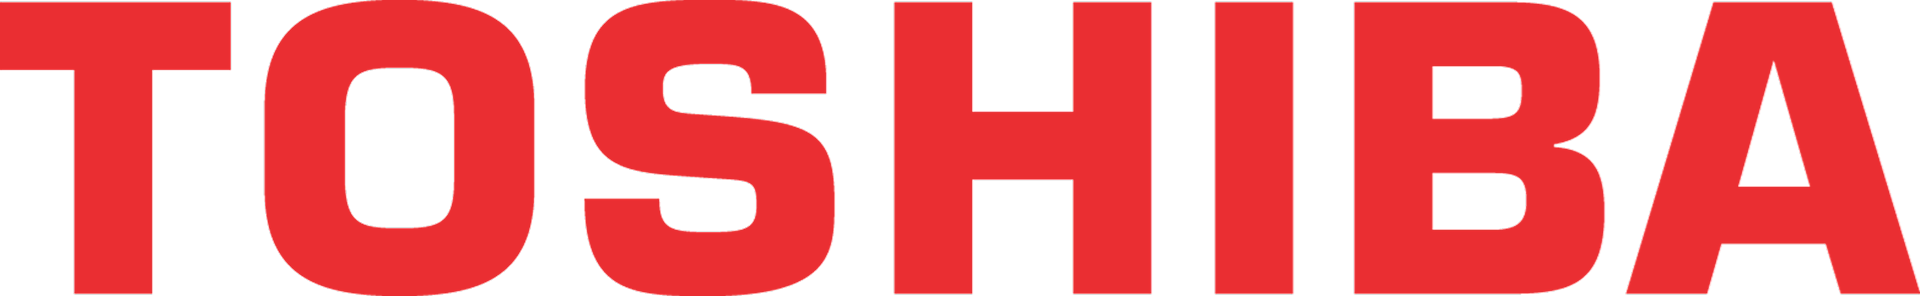 Toshiba logo_RS550_TOSH_4c_400.png